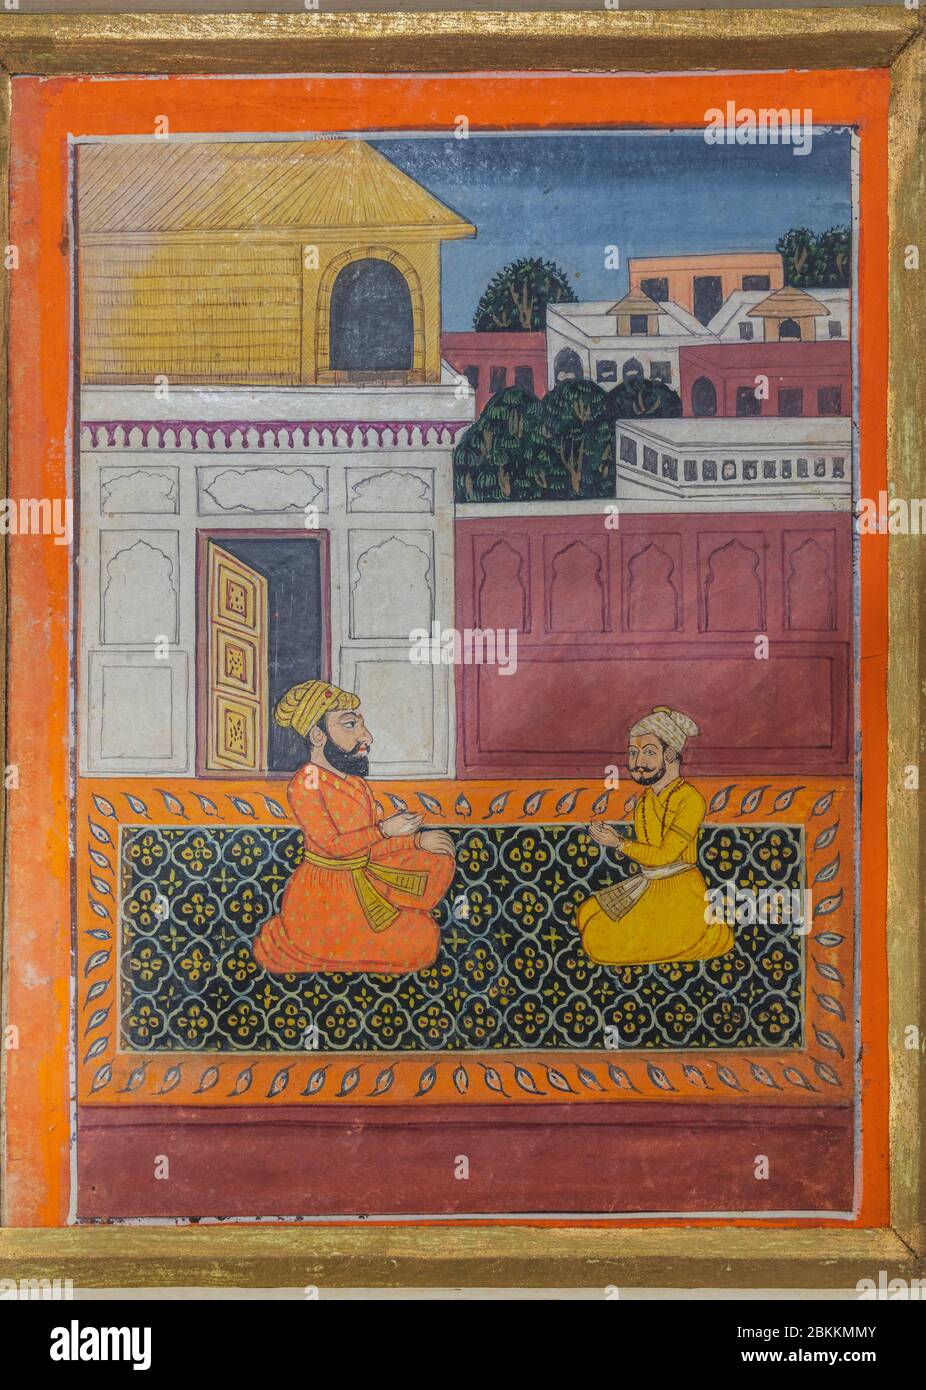 Guru Nanak conversing with Jai Ram, 1830s painting, Museum, Delhi, India Stock Photo